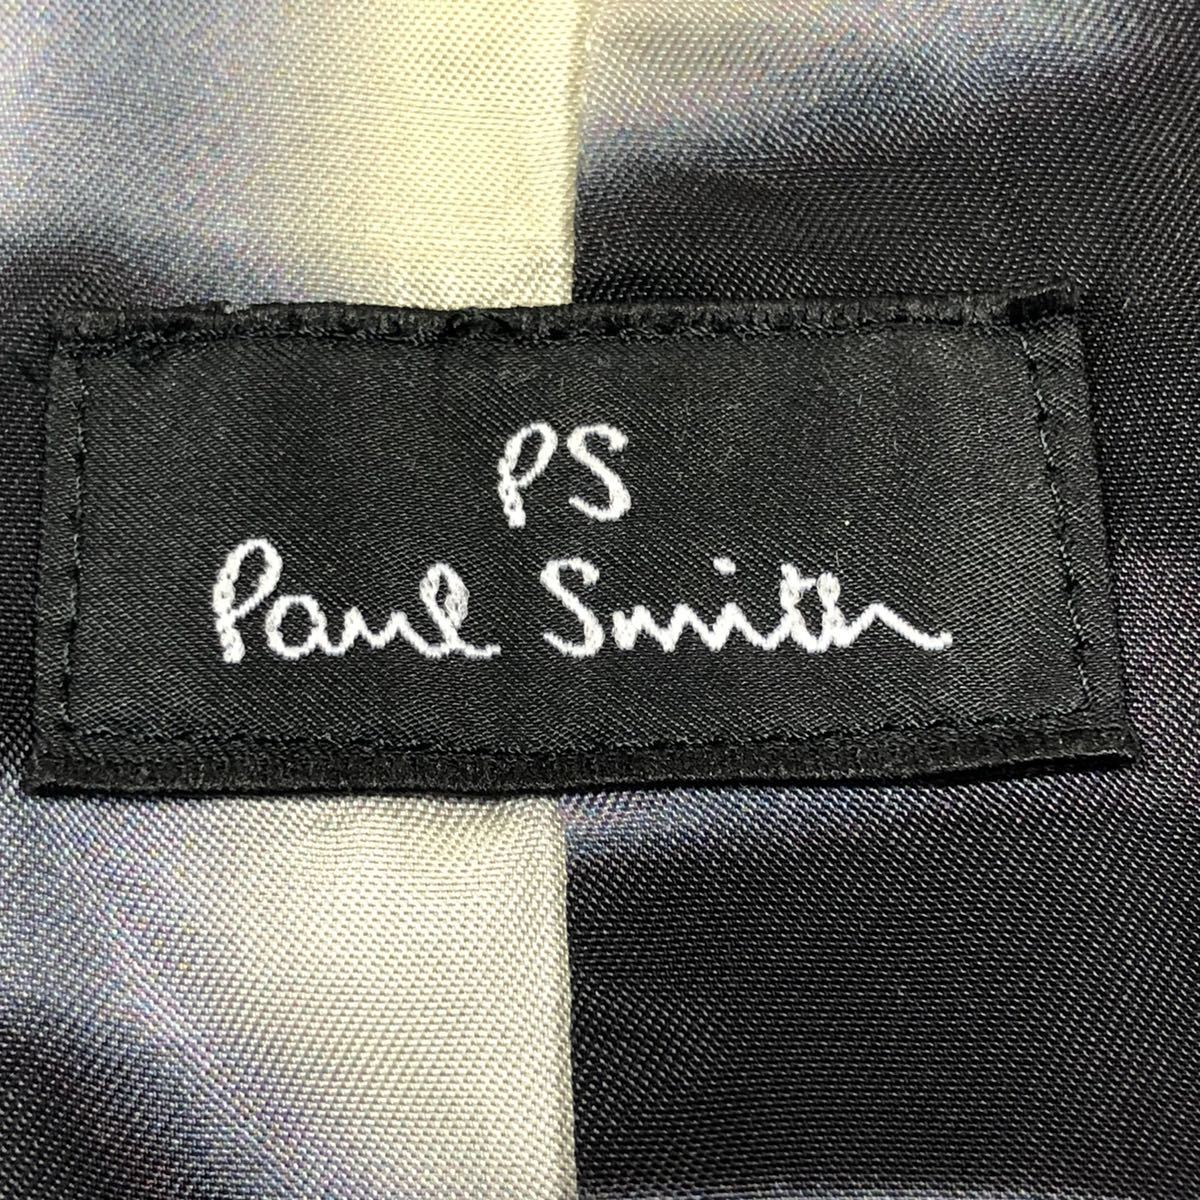 Paul Smith ポールスミス ベスト ジレ ウール 薄手 ブラック 総柄 XLサイズ PP-BM-39987 中古 使用感あり_画像7